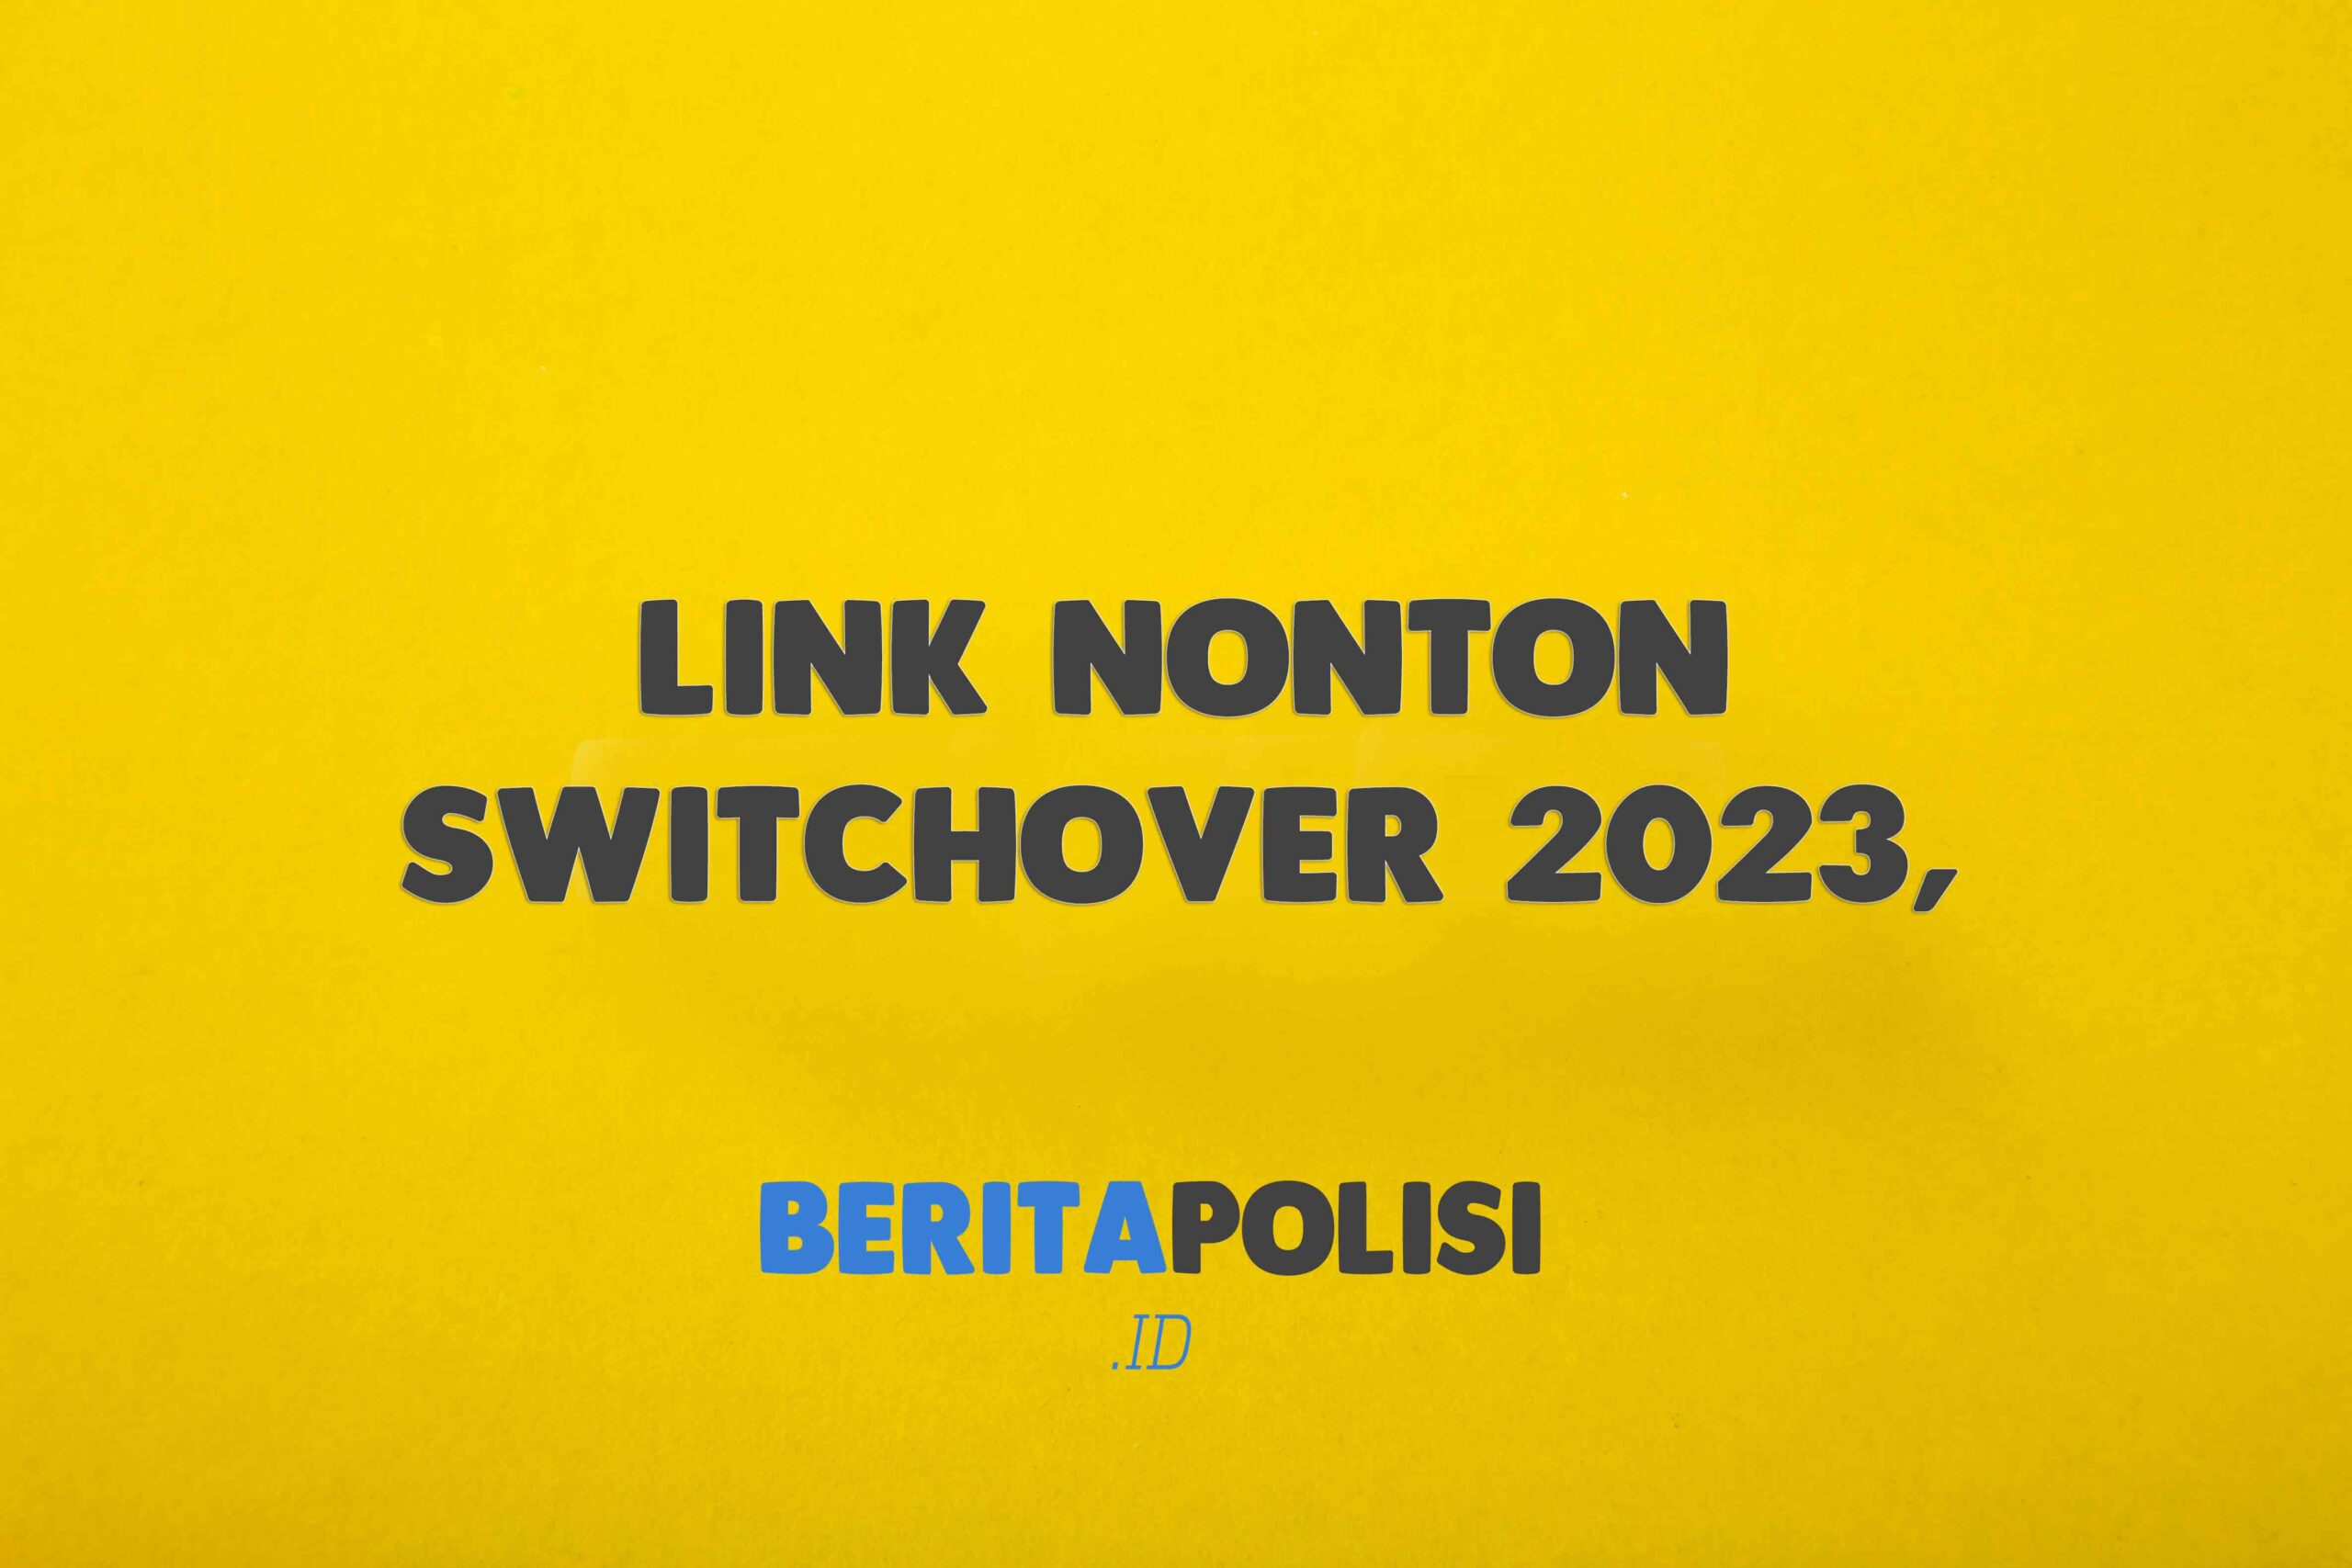 Link Nonton Switchover 2023, Series Terbaru Adhisty Zara